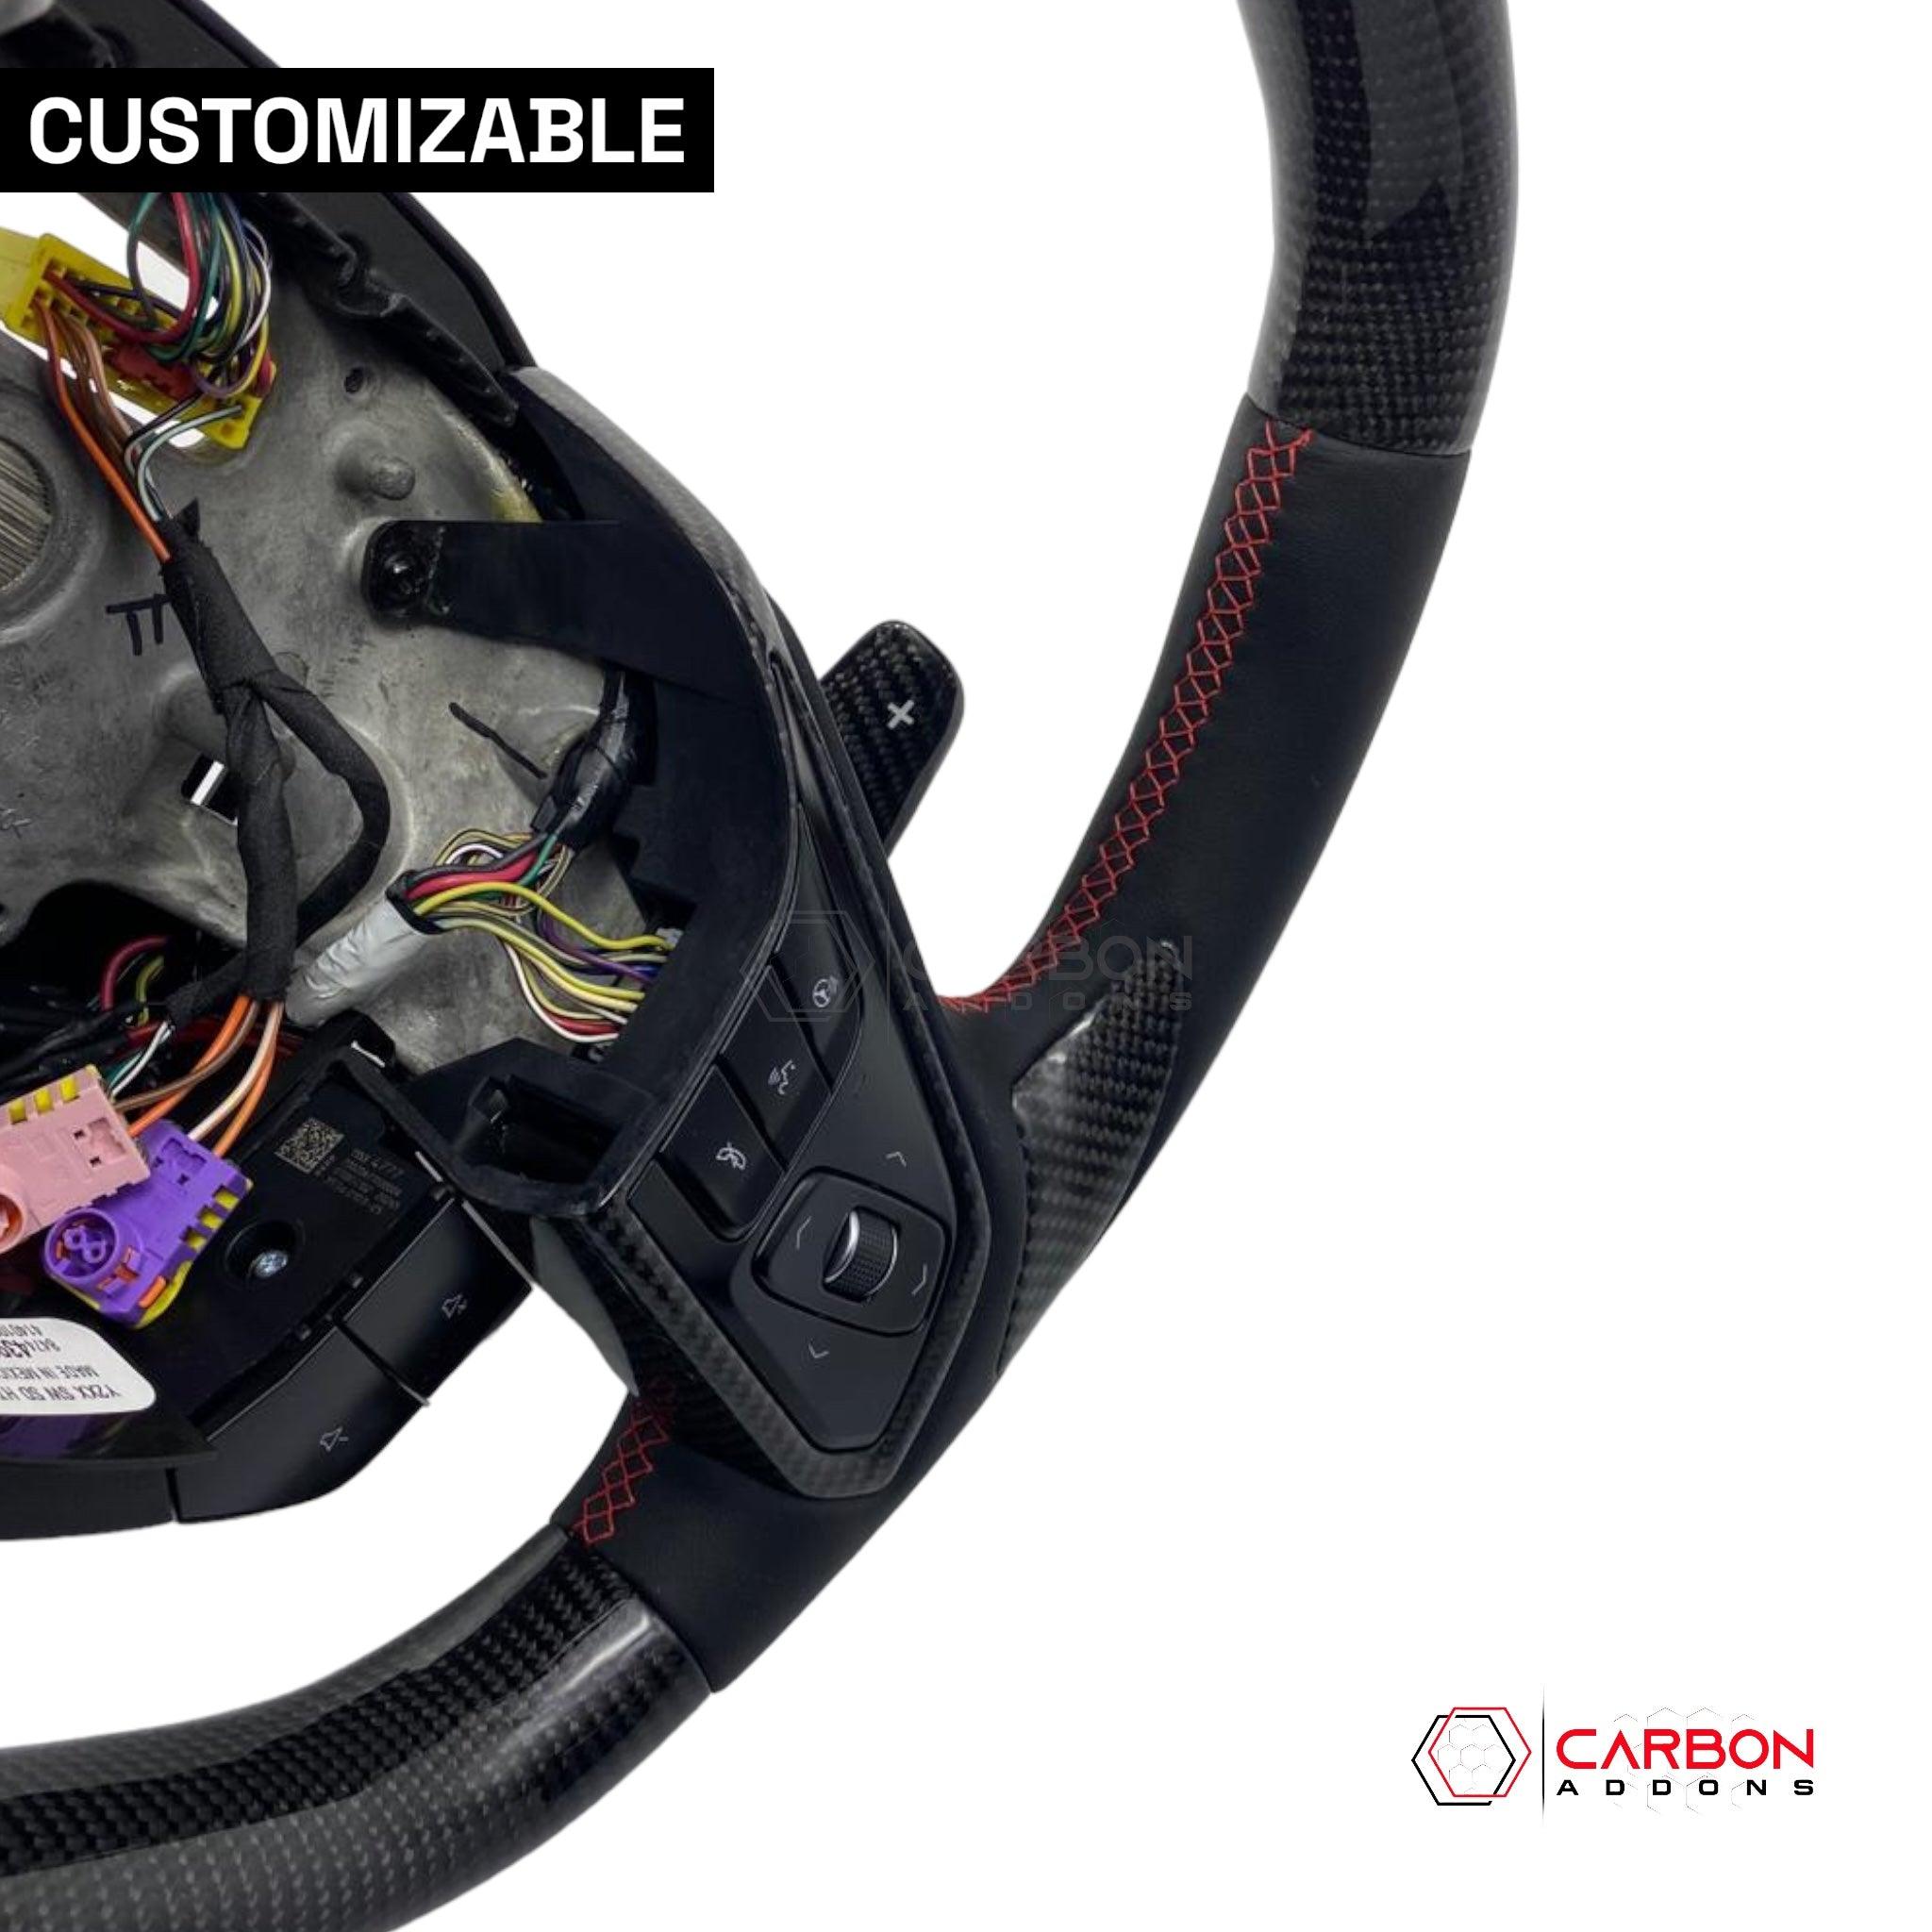 [Complete/Heated] C8 Corvette 2020+ Customizable Carbon Fiber Steering Wheel - carbonaddons Carbon Fiber Parts, Accessories, Upgrades, Mods